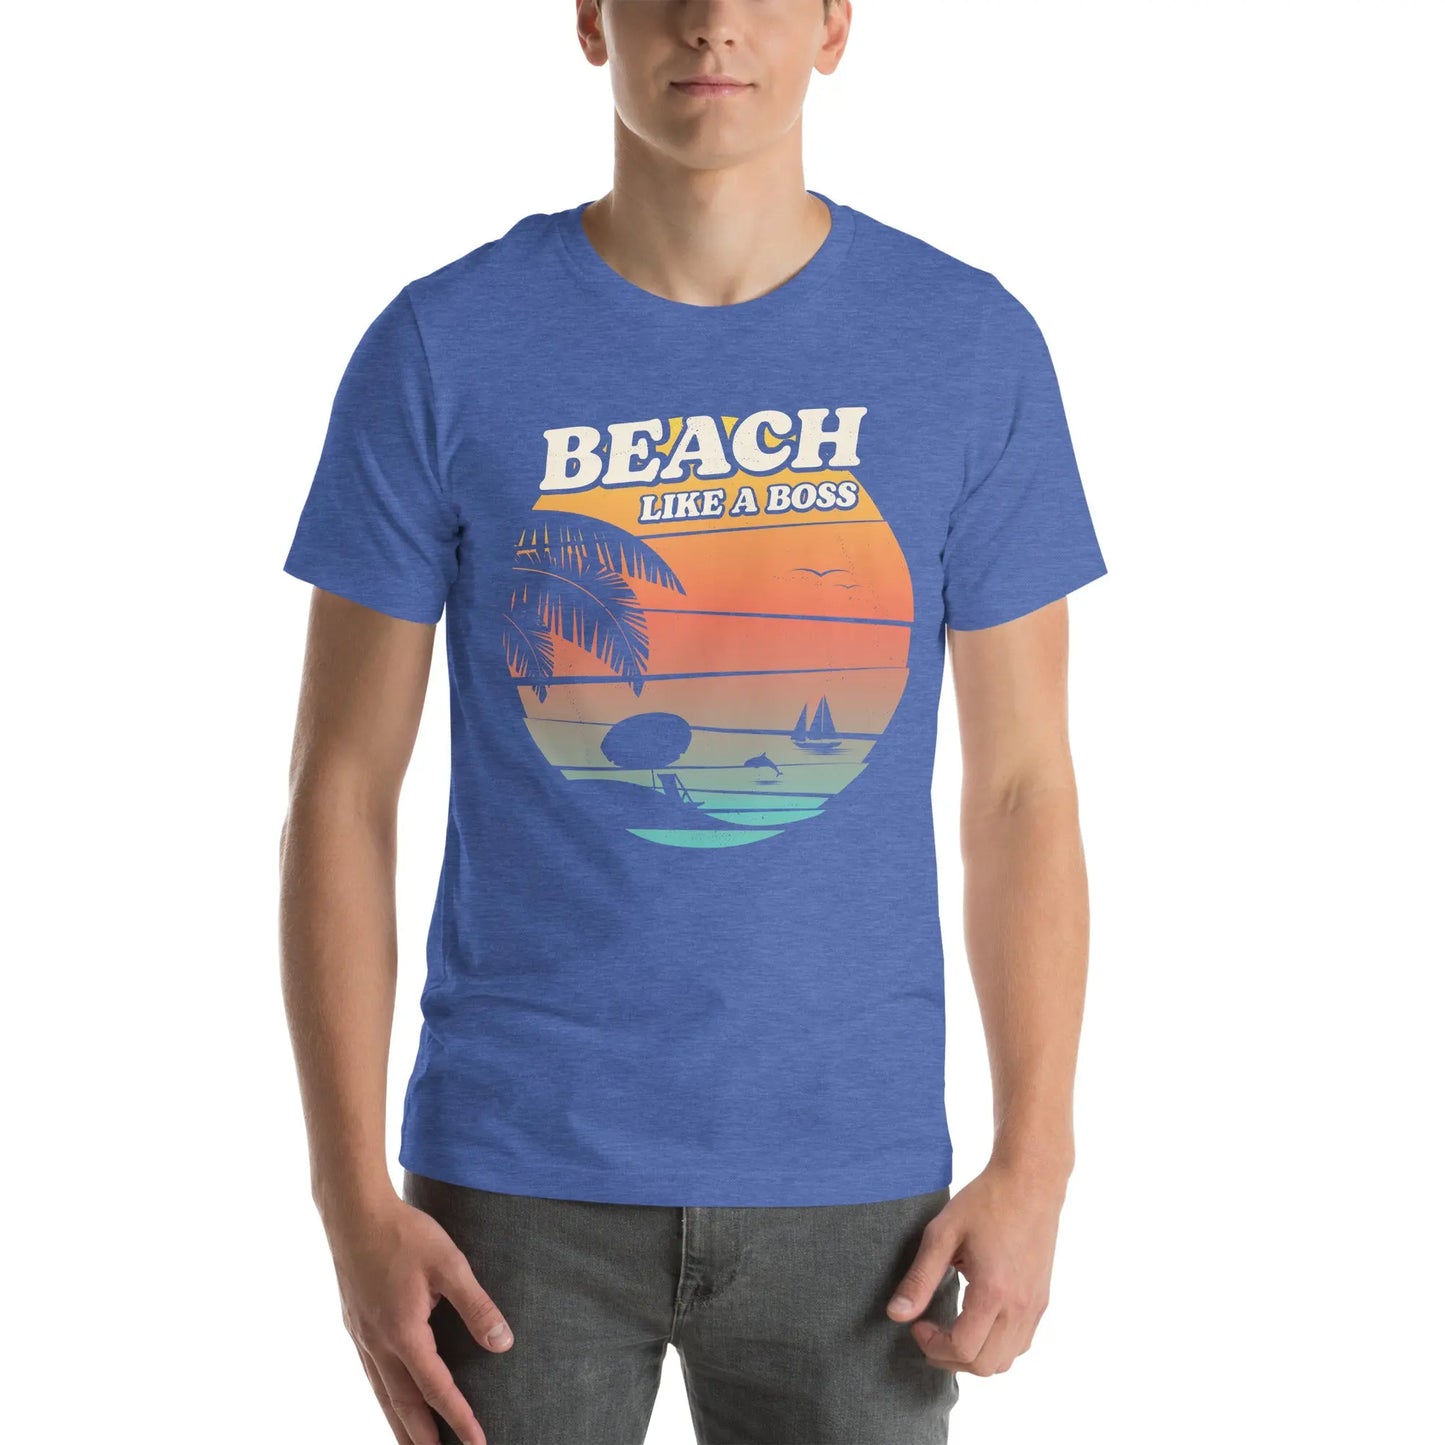 Beach Like a Boss with this Coastal Adult Unisex T-Shirt - Coastal Journeyz2938635_8530